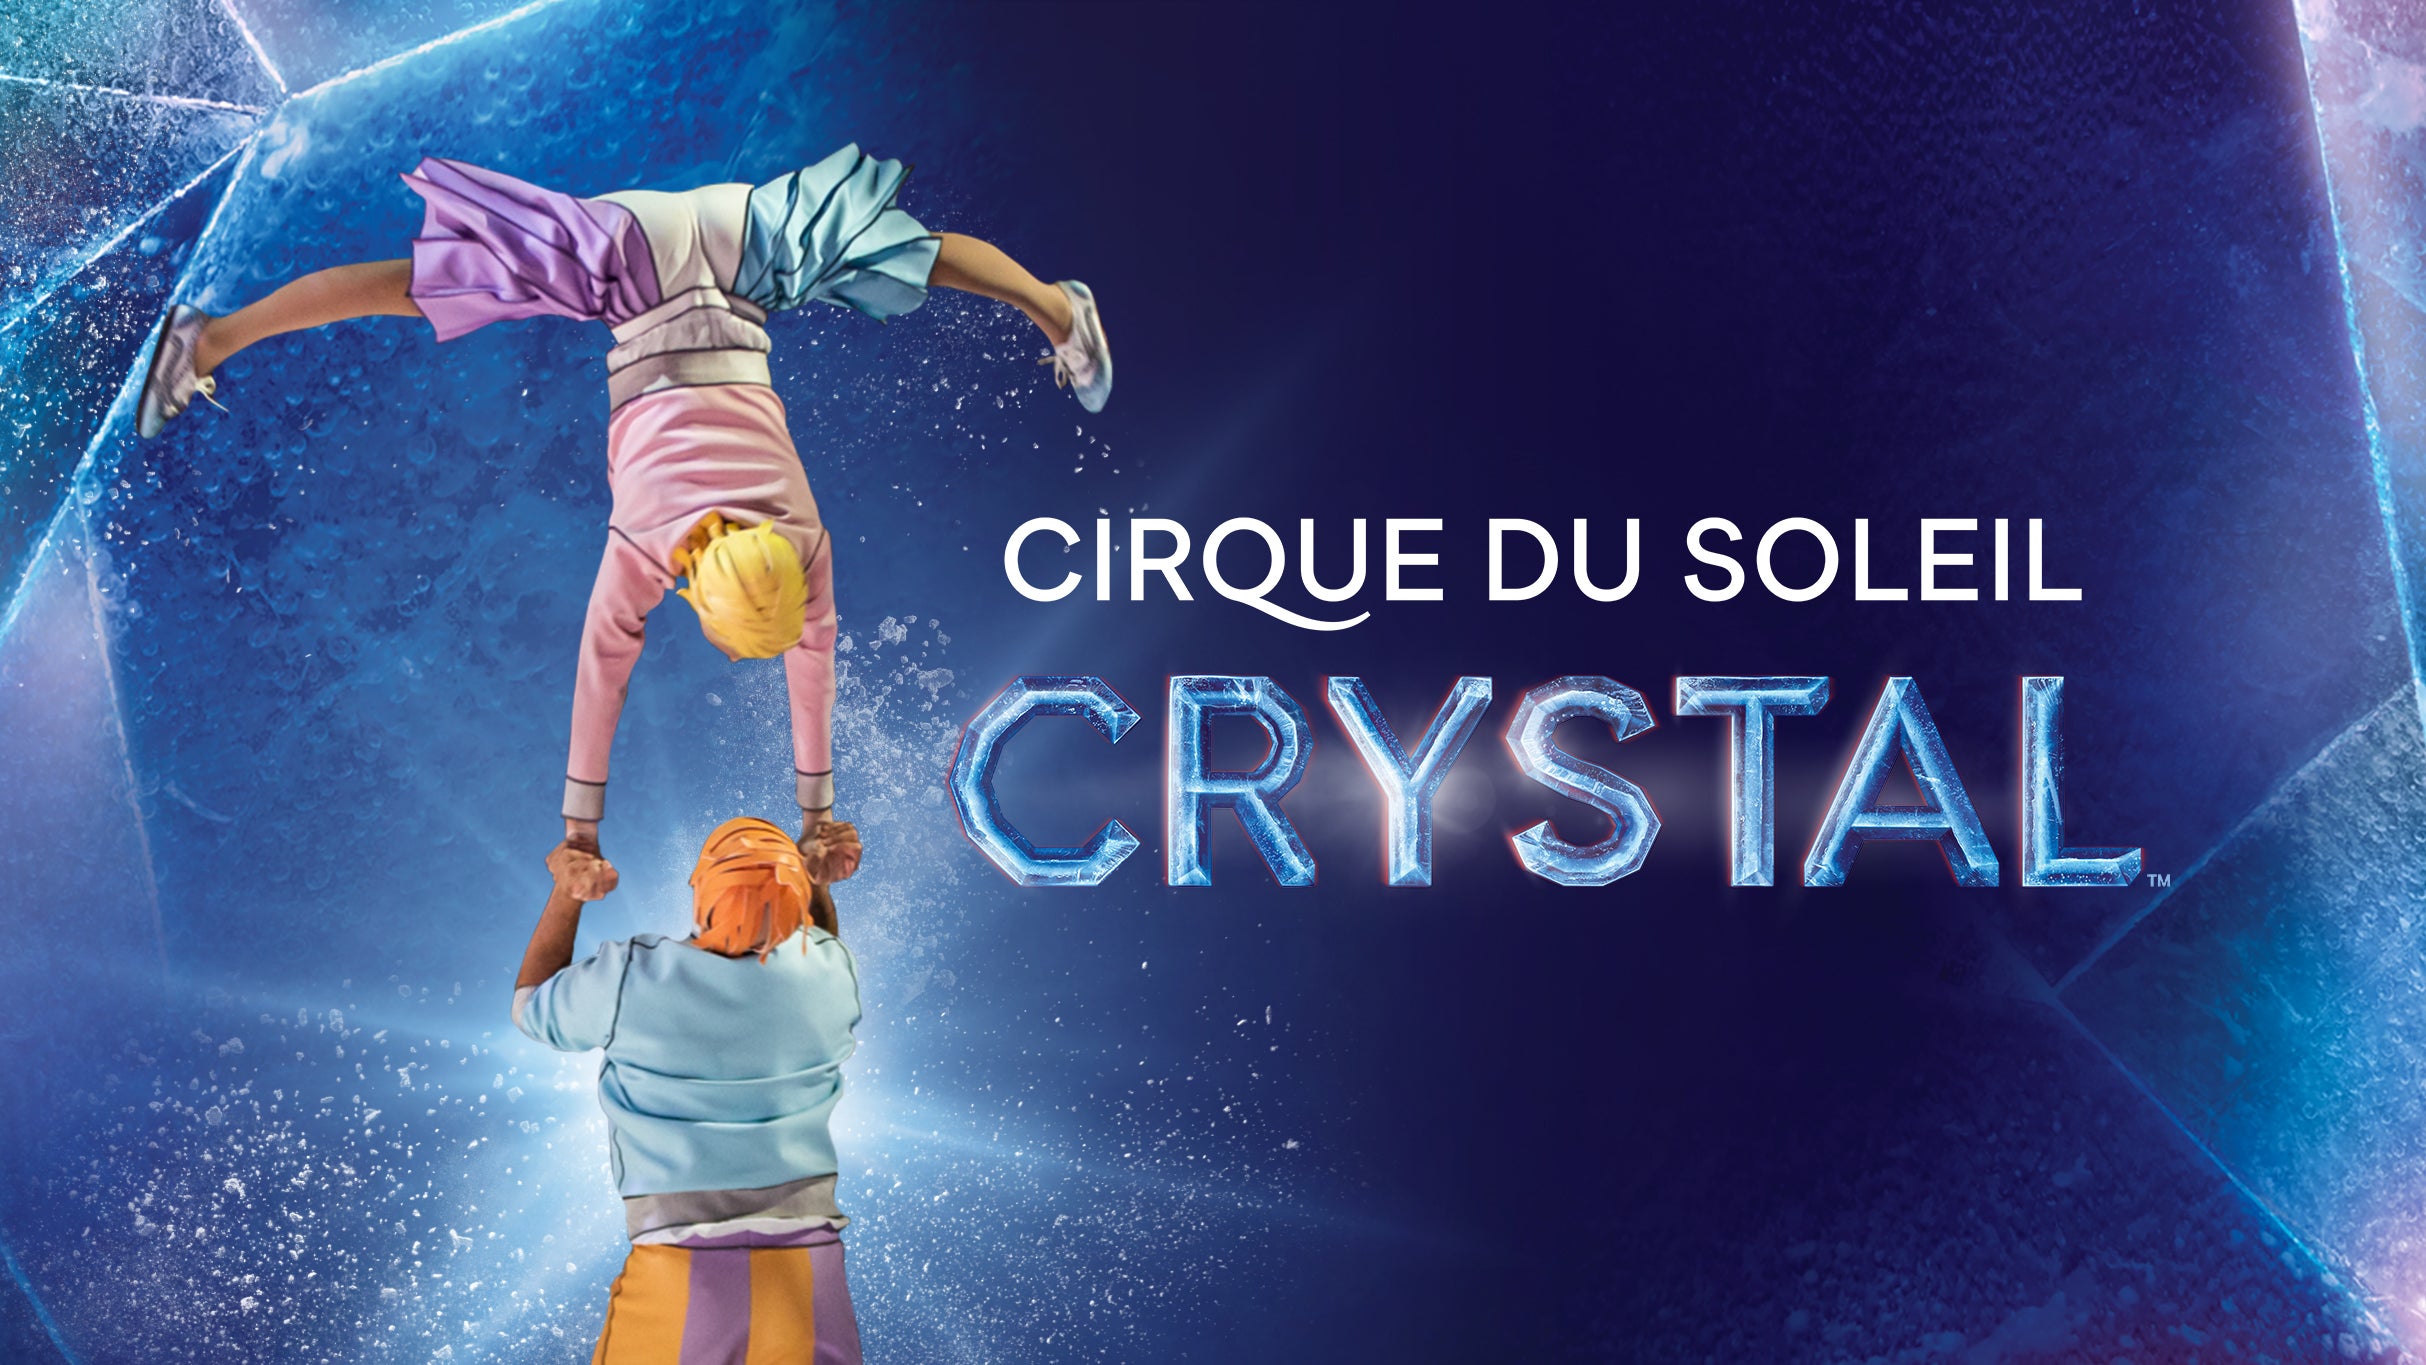 Cirque du Soleil: Crystal in Hoffman Estates promo photo for Cirque Club presale offer code